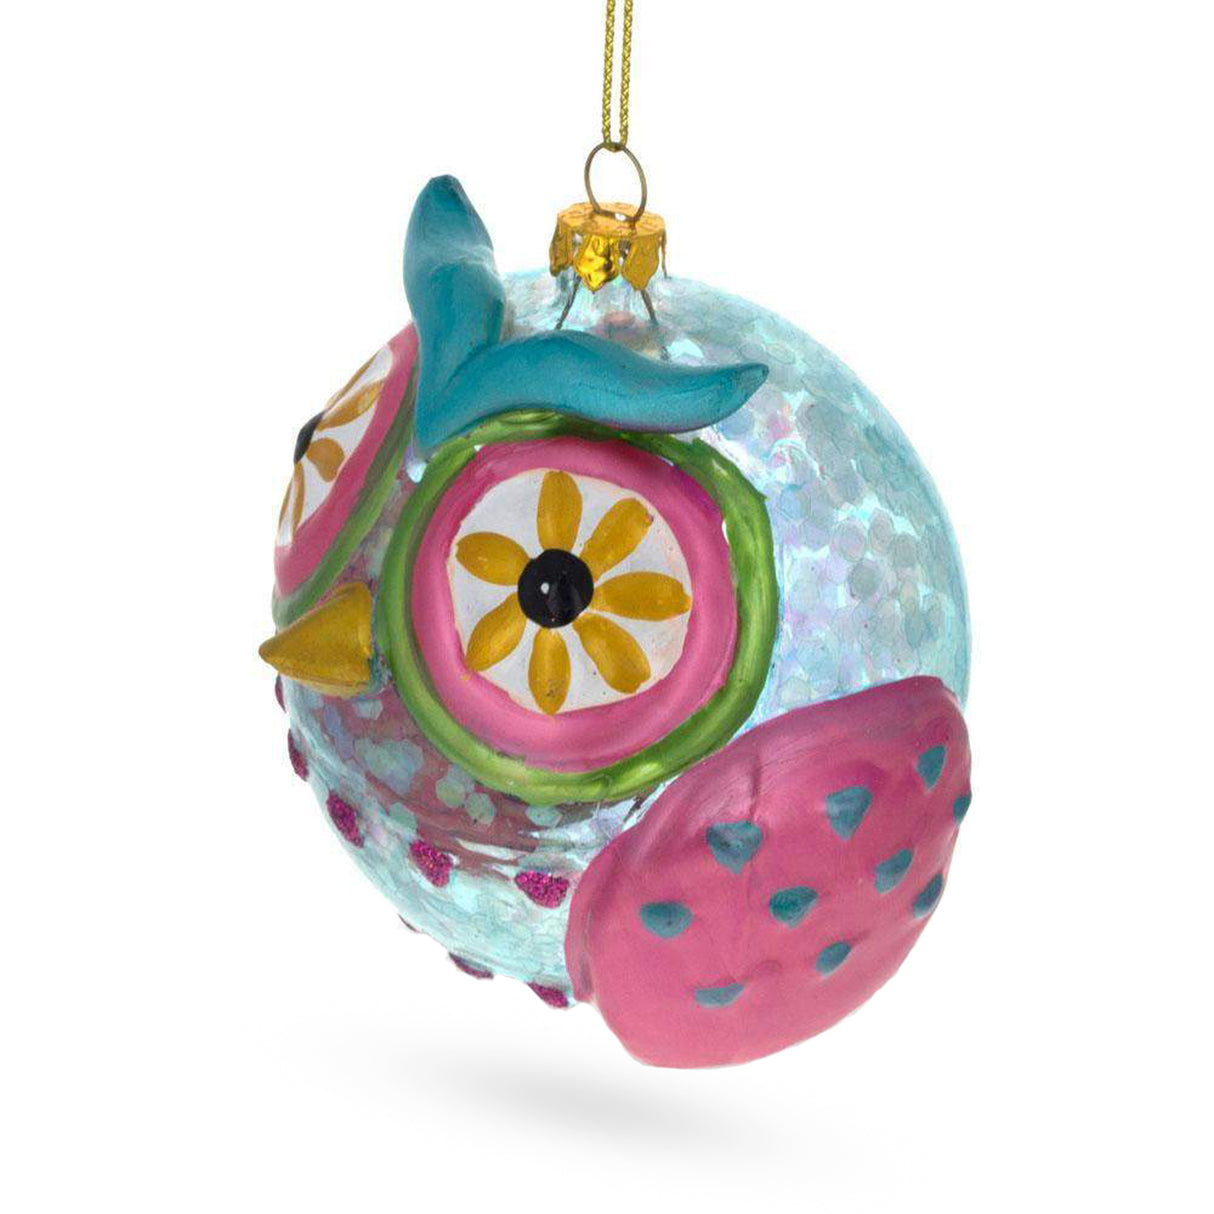 Buy Christmas Ornaments > Animals > Birds > Owls by BestPysanky Online Gift Ship